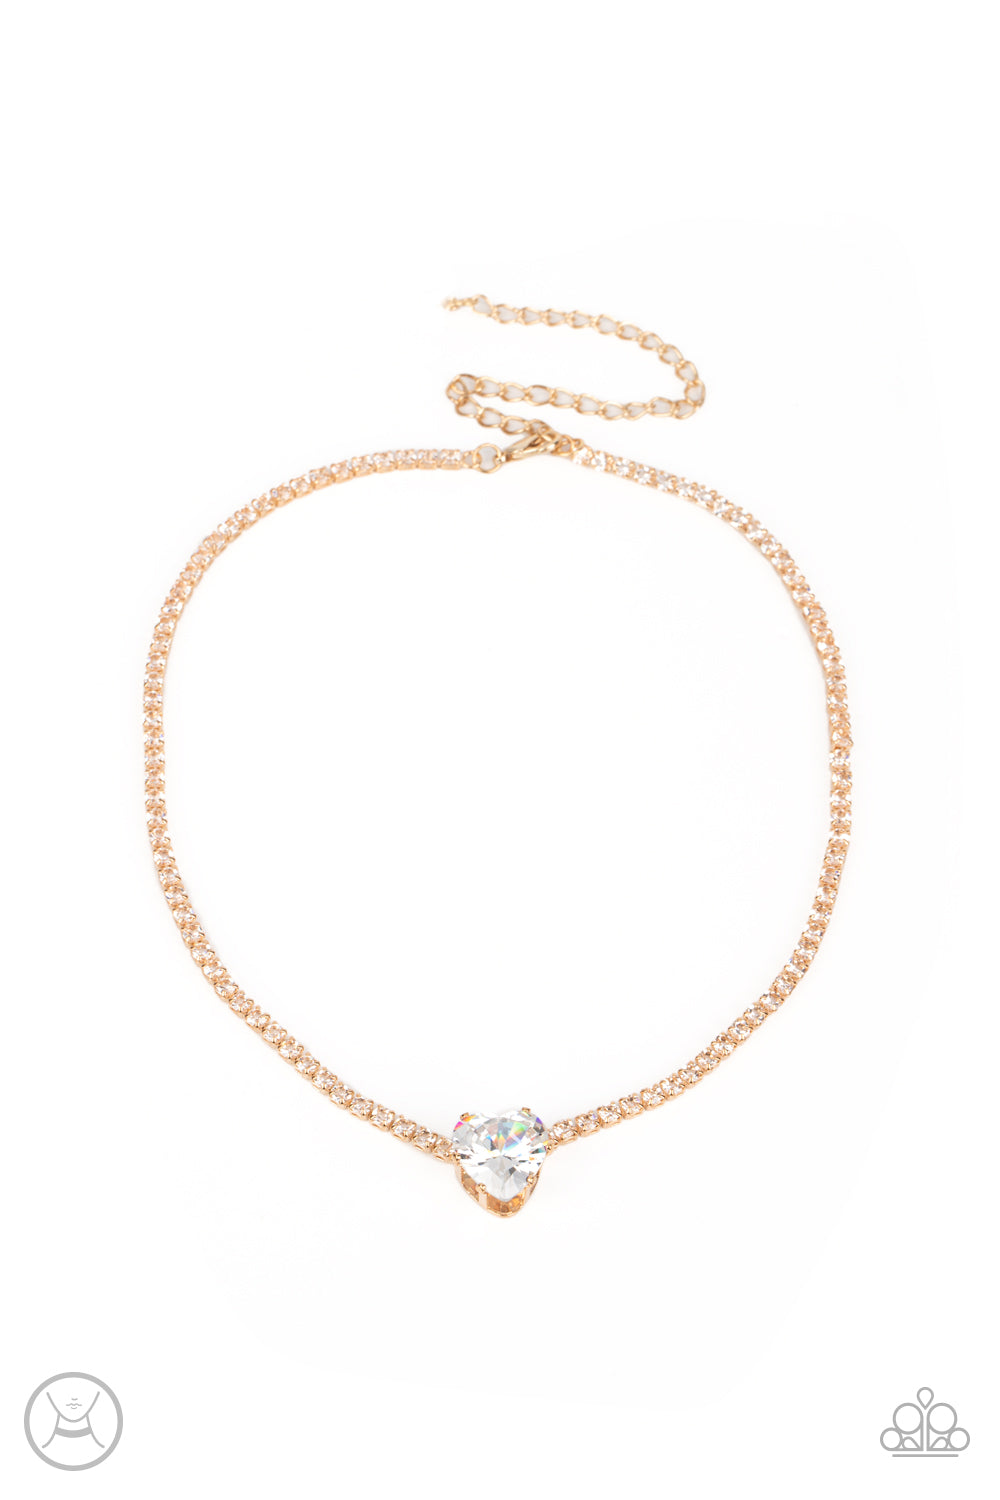 Flirty Fiancé - Gold Necklace Set - Princess Glam Shop